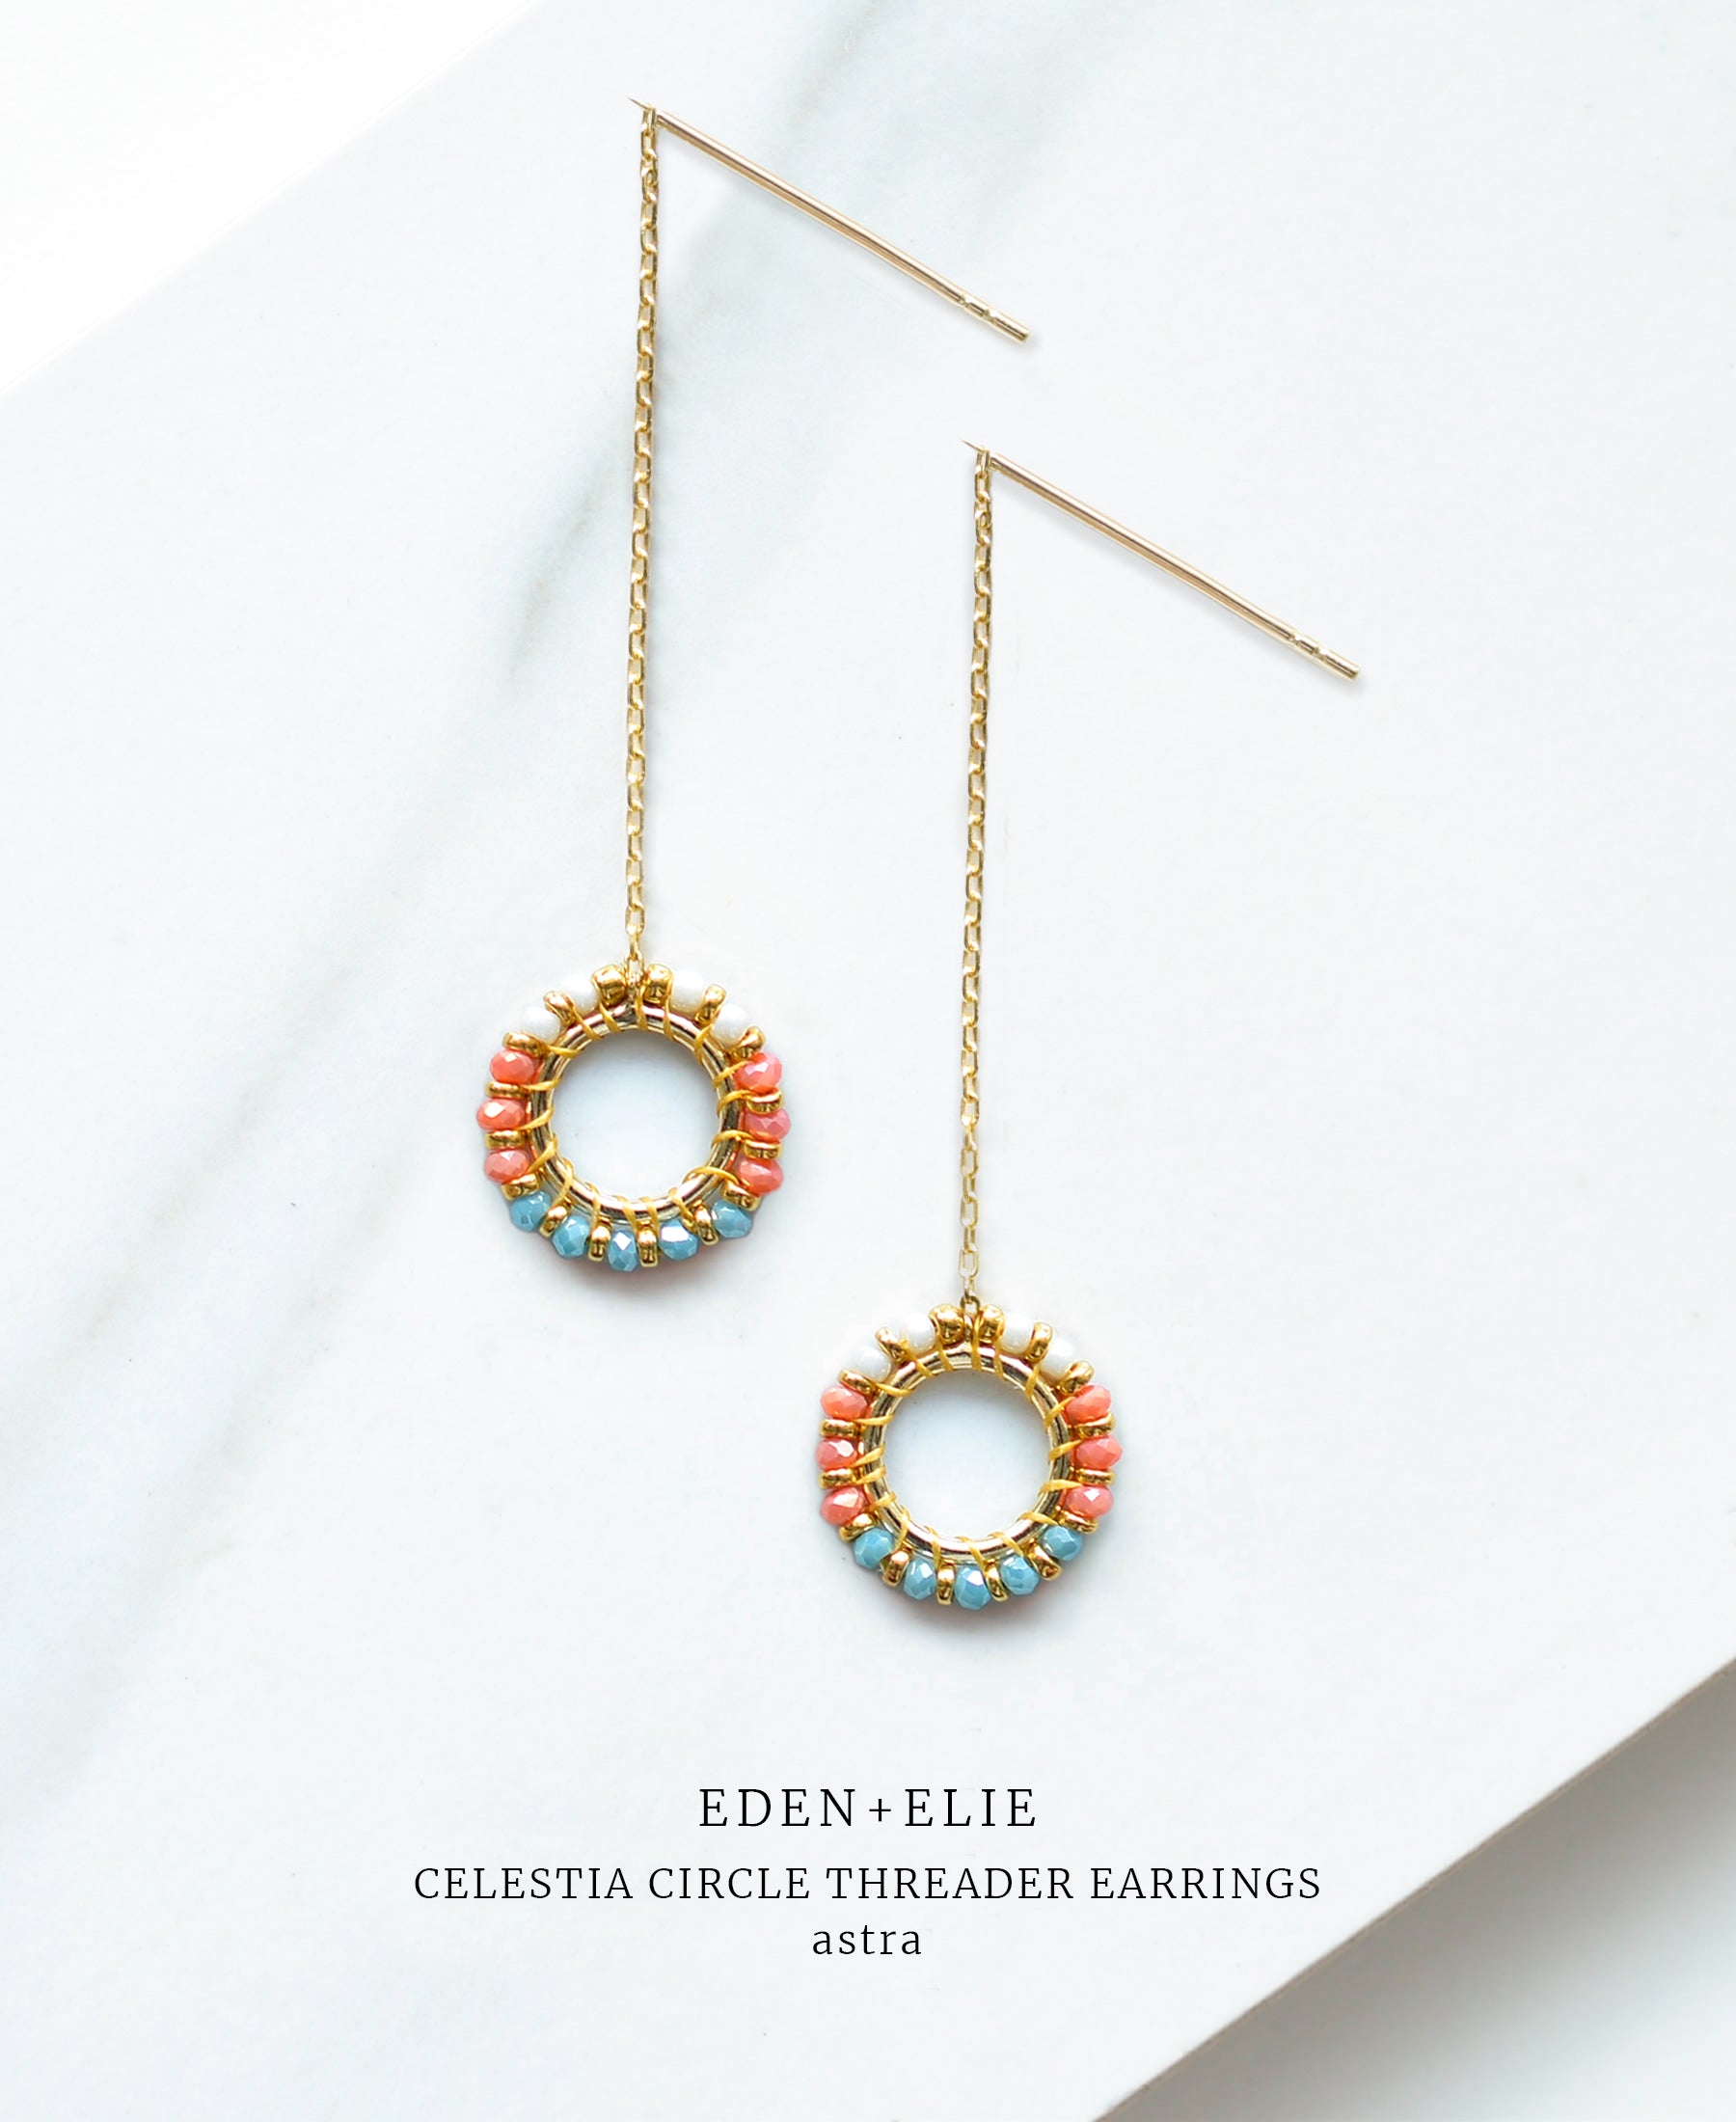 EDEN + ELIE Celestia Circle Threader Earrings - Astra